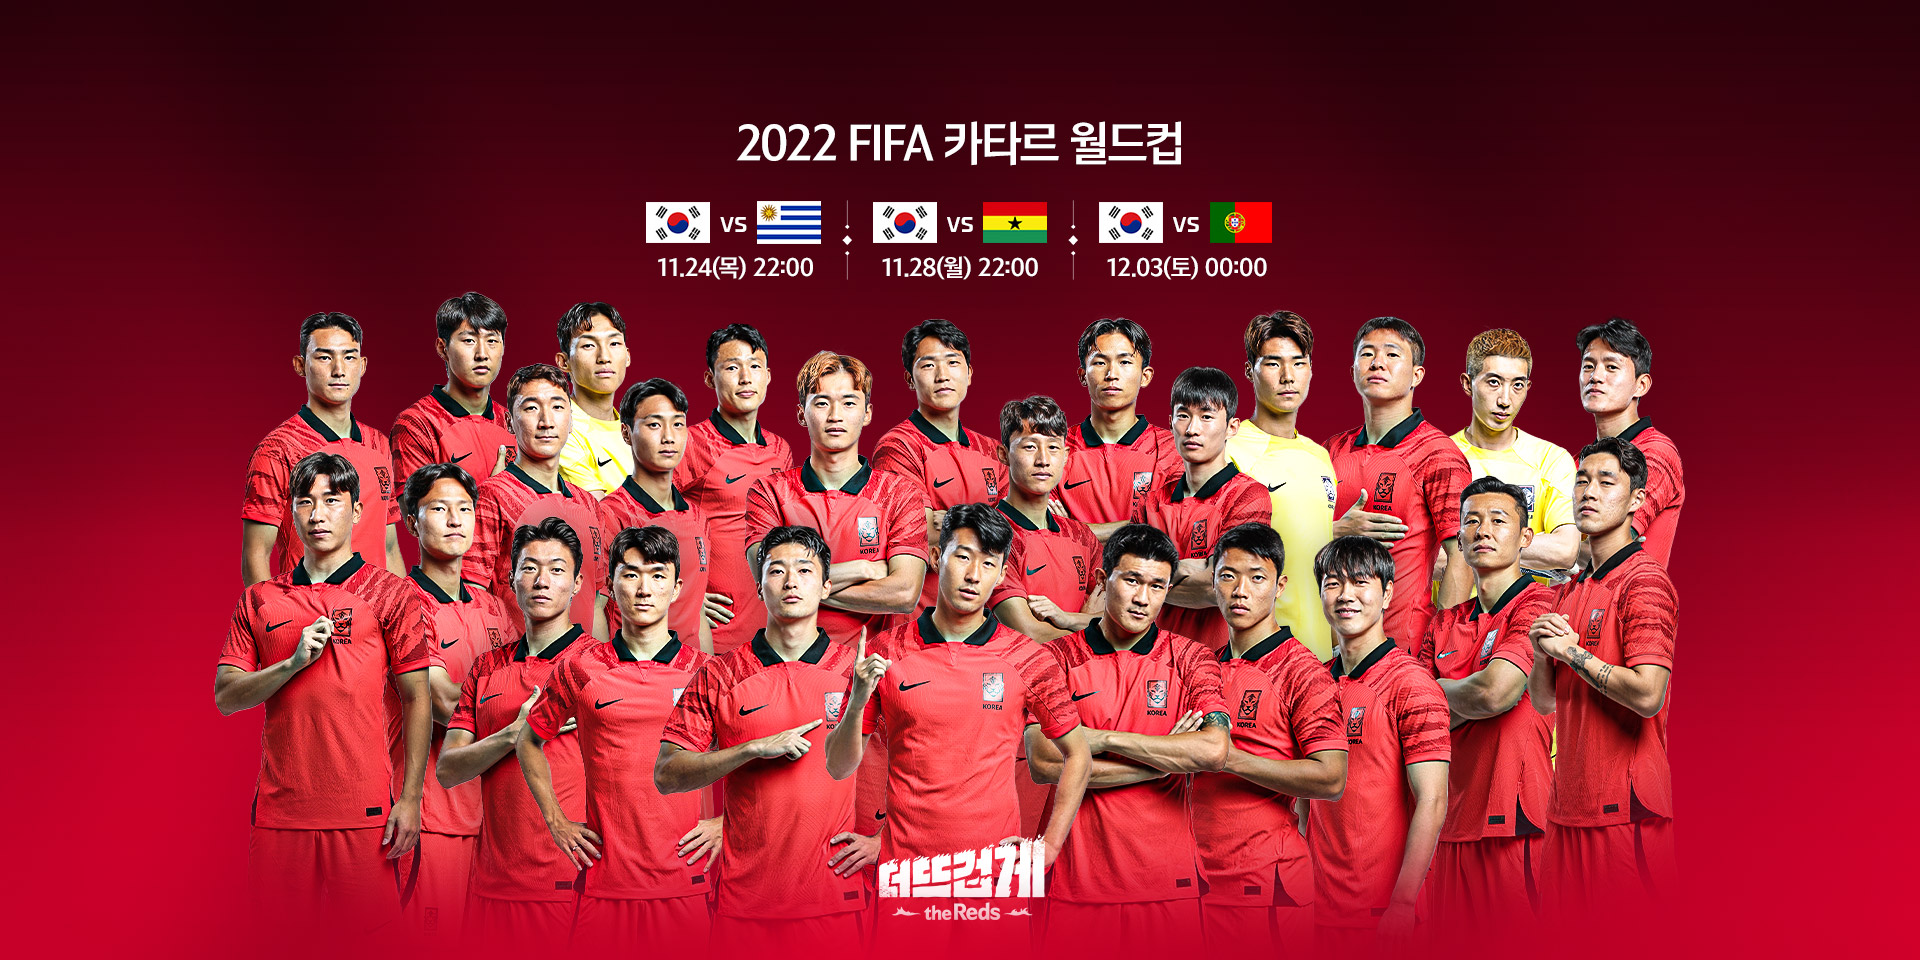 2022 FIFA 카타르월드컵 대한민국 선수명단과 일정